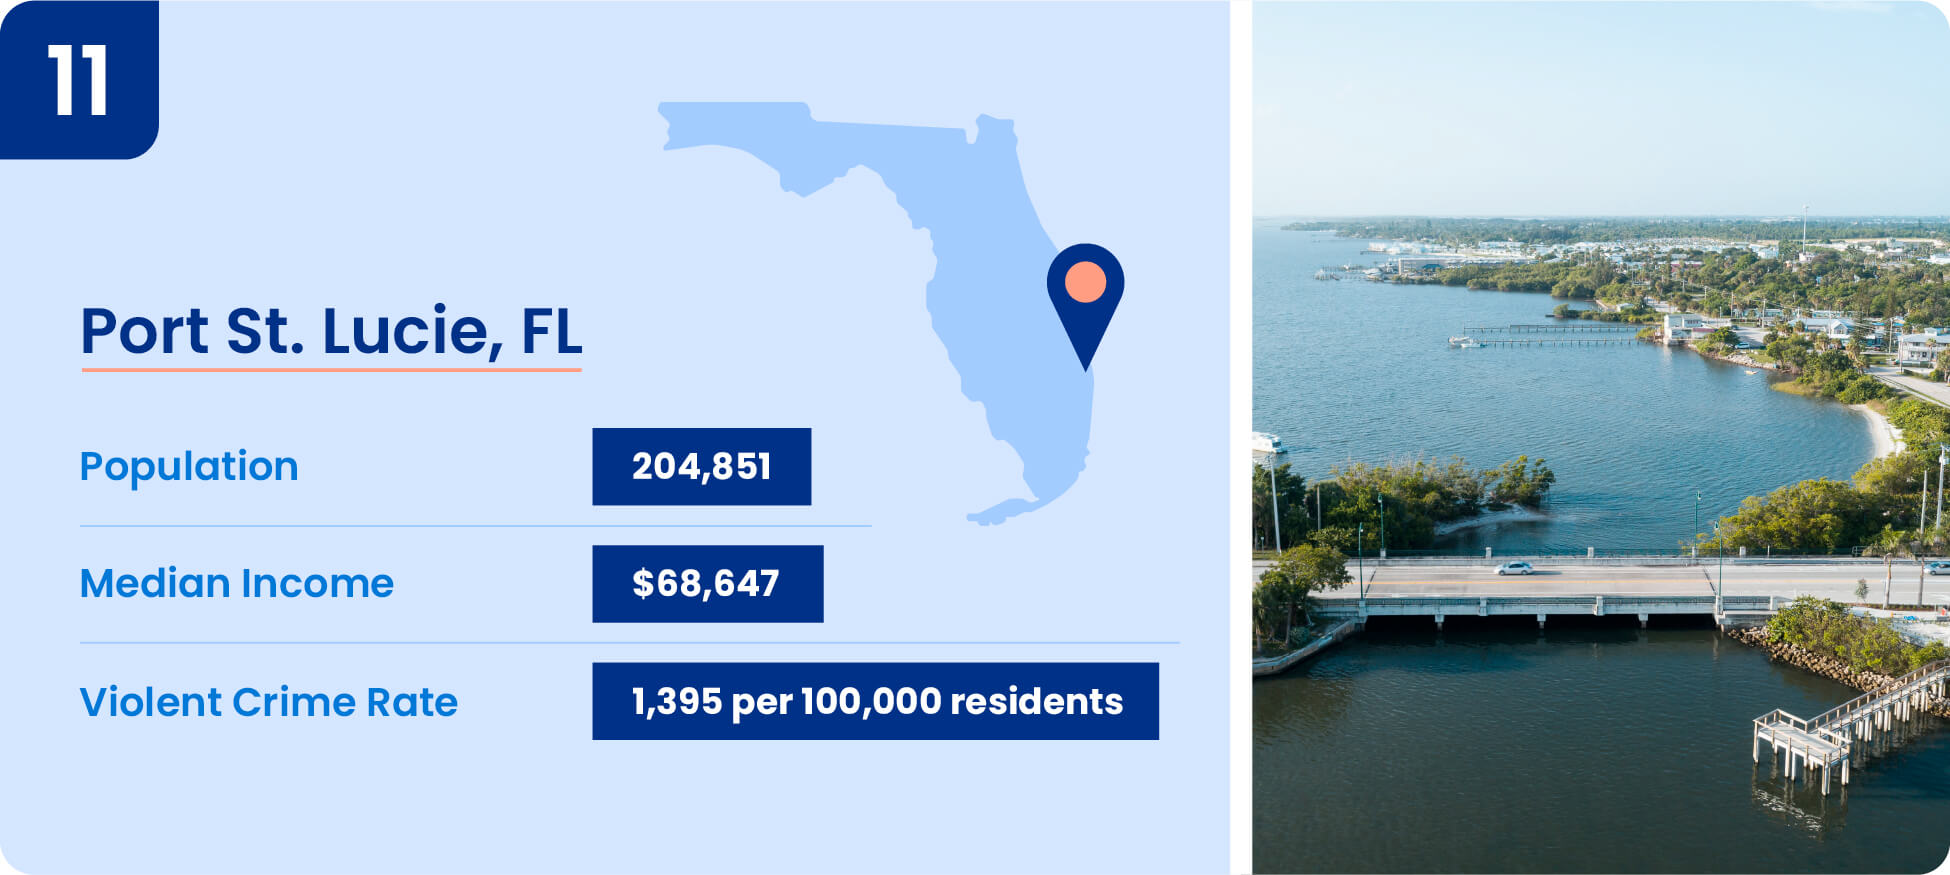 Image shows safety data including median income, population, and violent crime rate for Port St. Lucie, Florida.